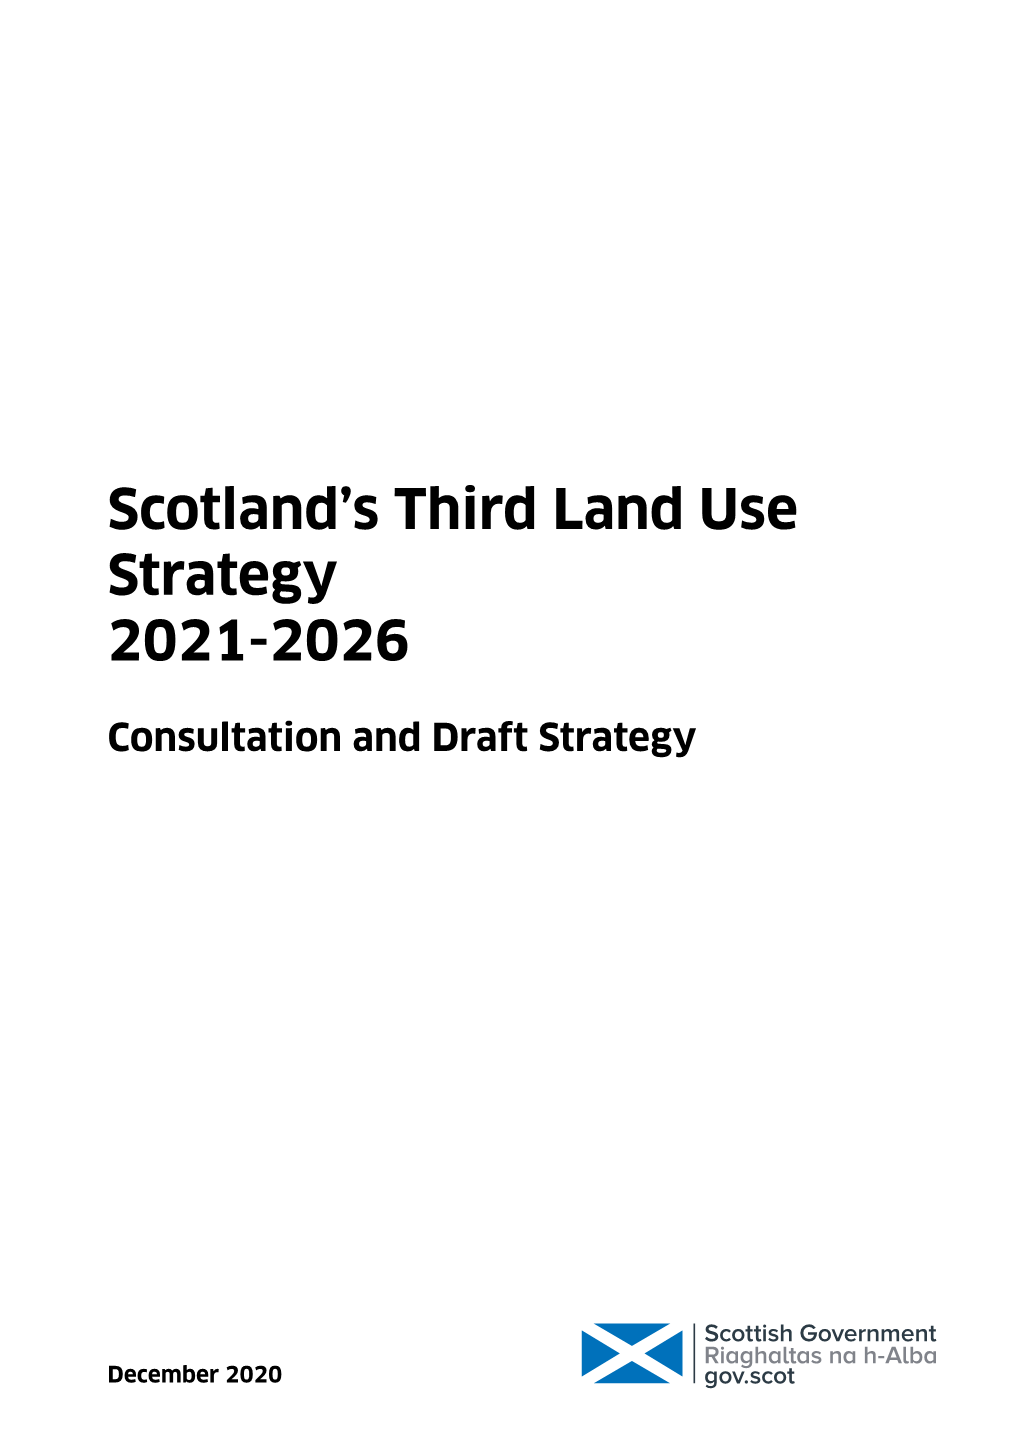 Scotland's Third Land Use Strategy 2021-2026